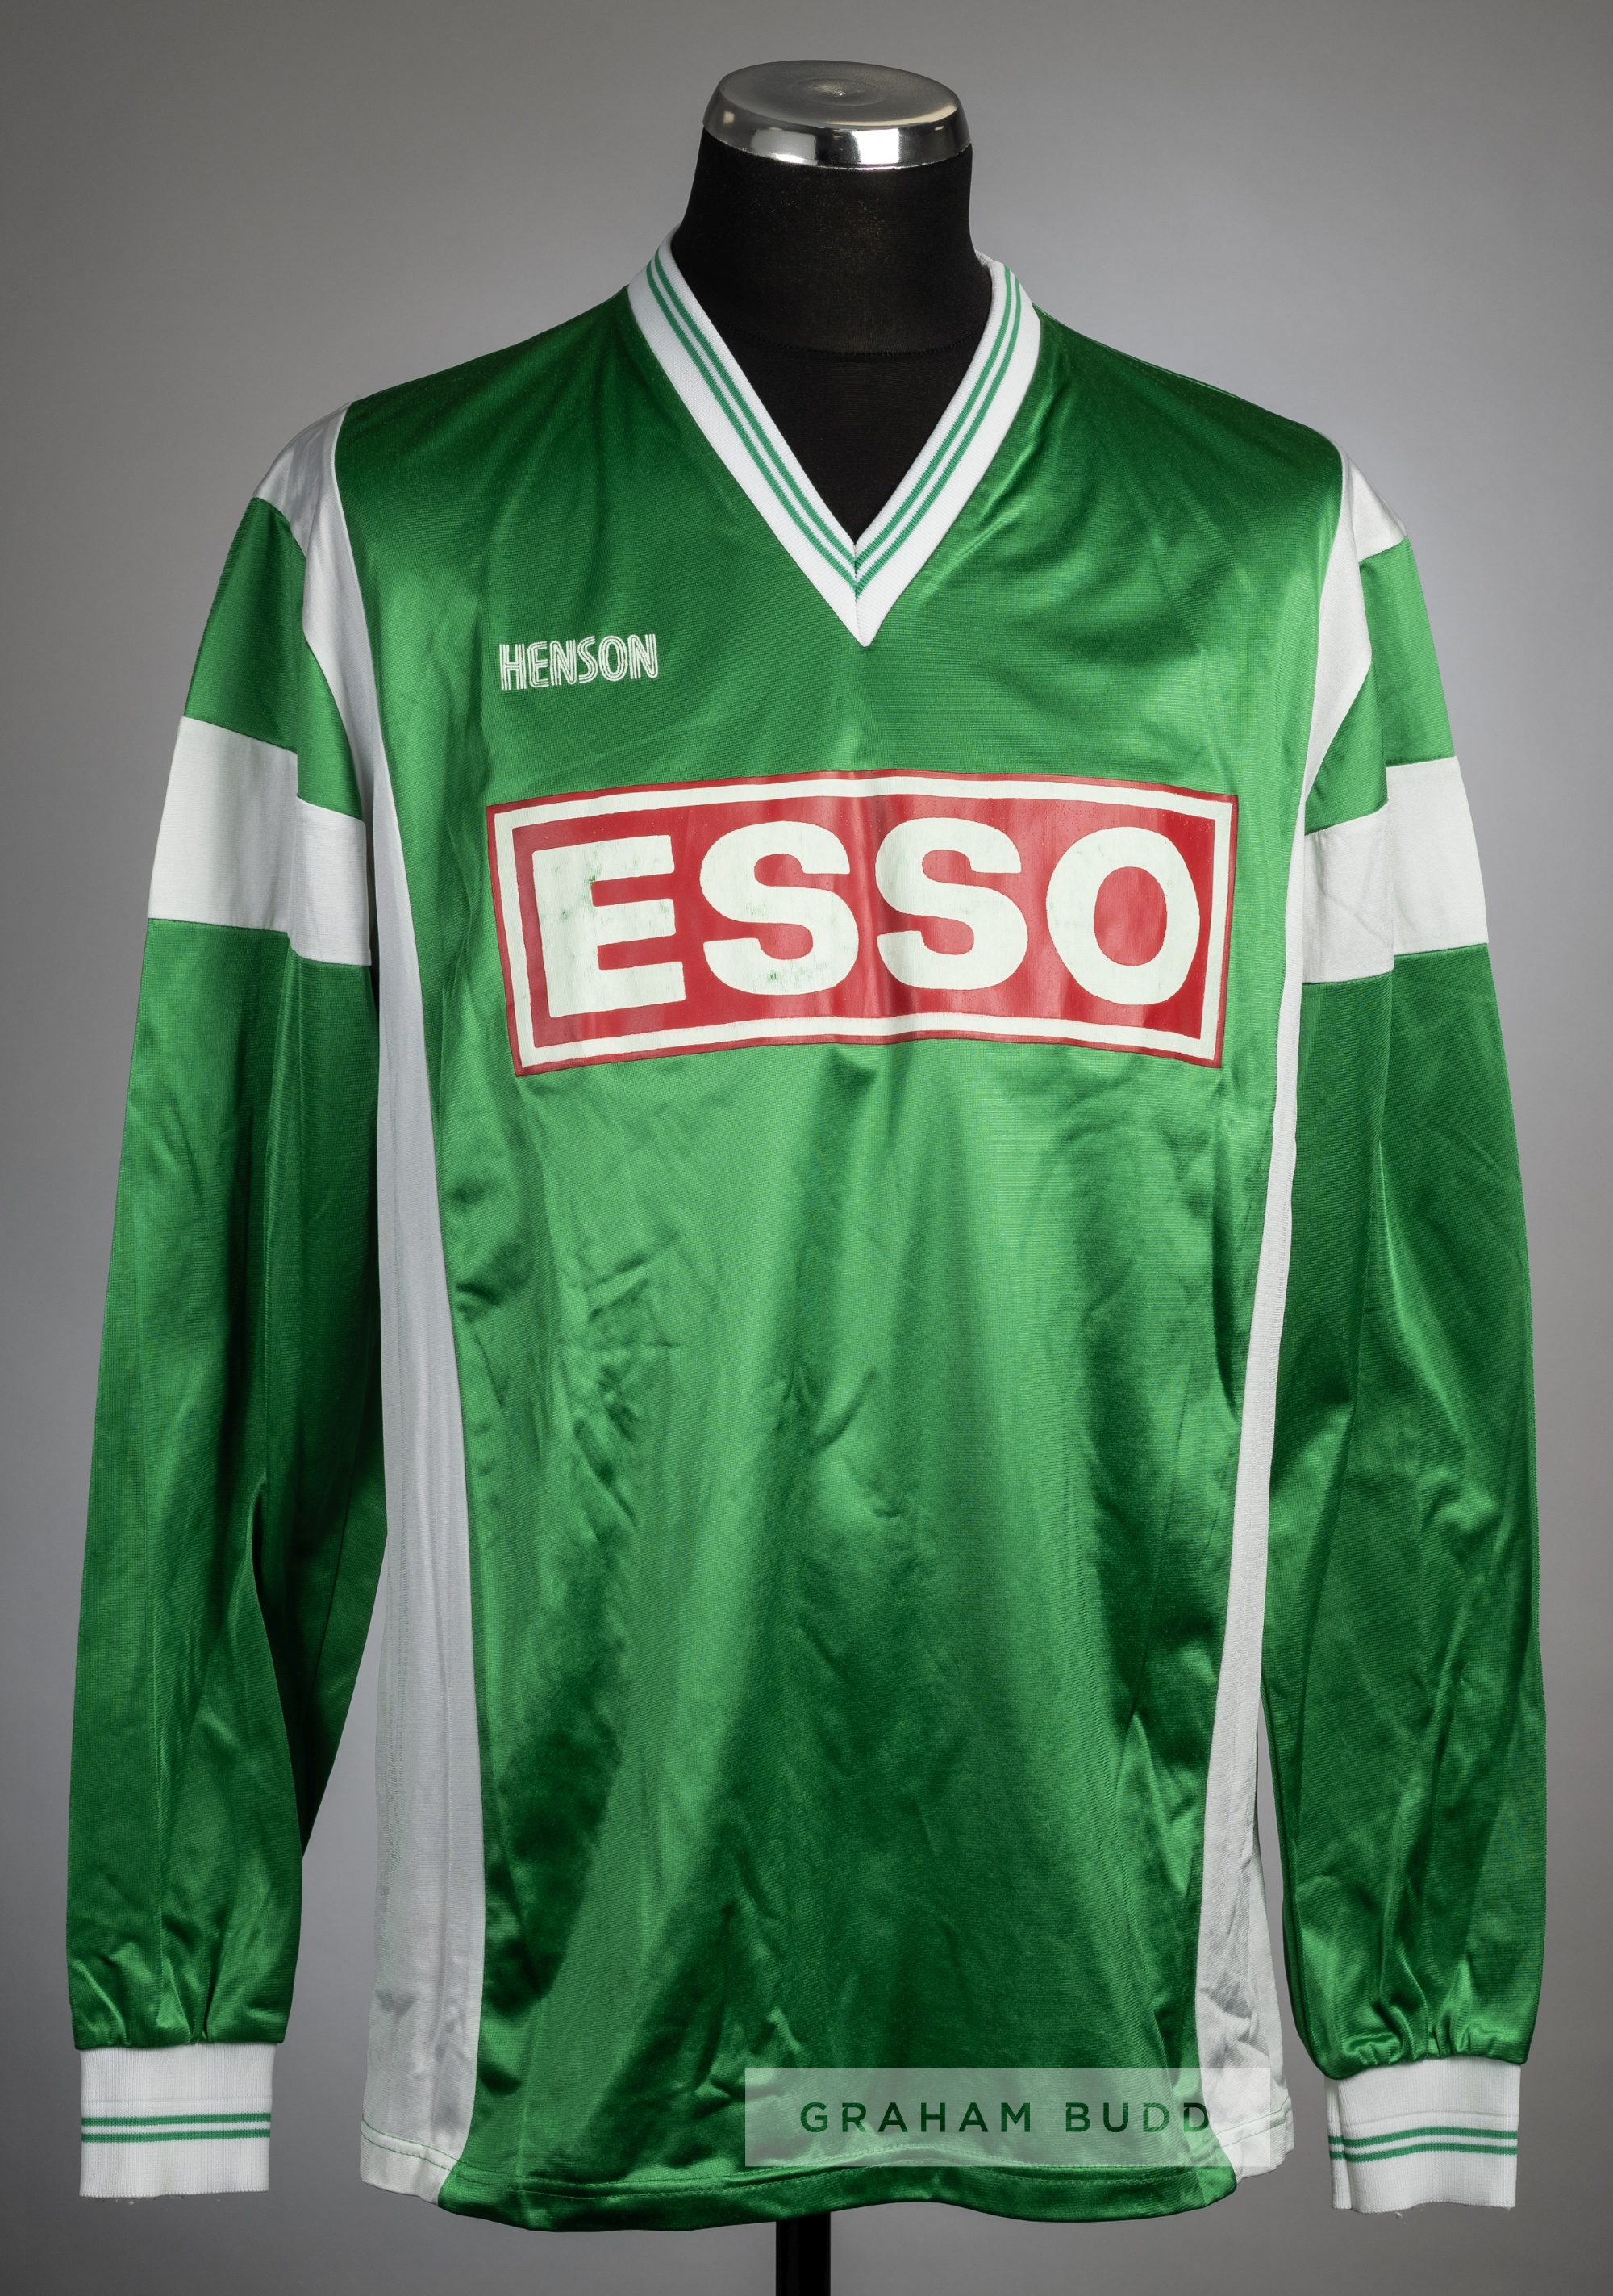 Icelandic green and white Volsungur Husavik no.15 jersey, circa 1990s, Henson, long-sleeved with